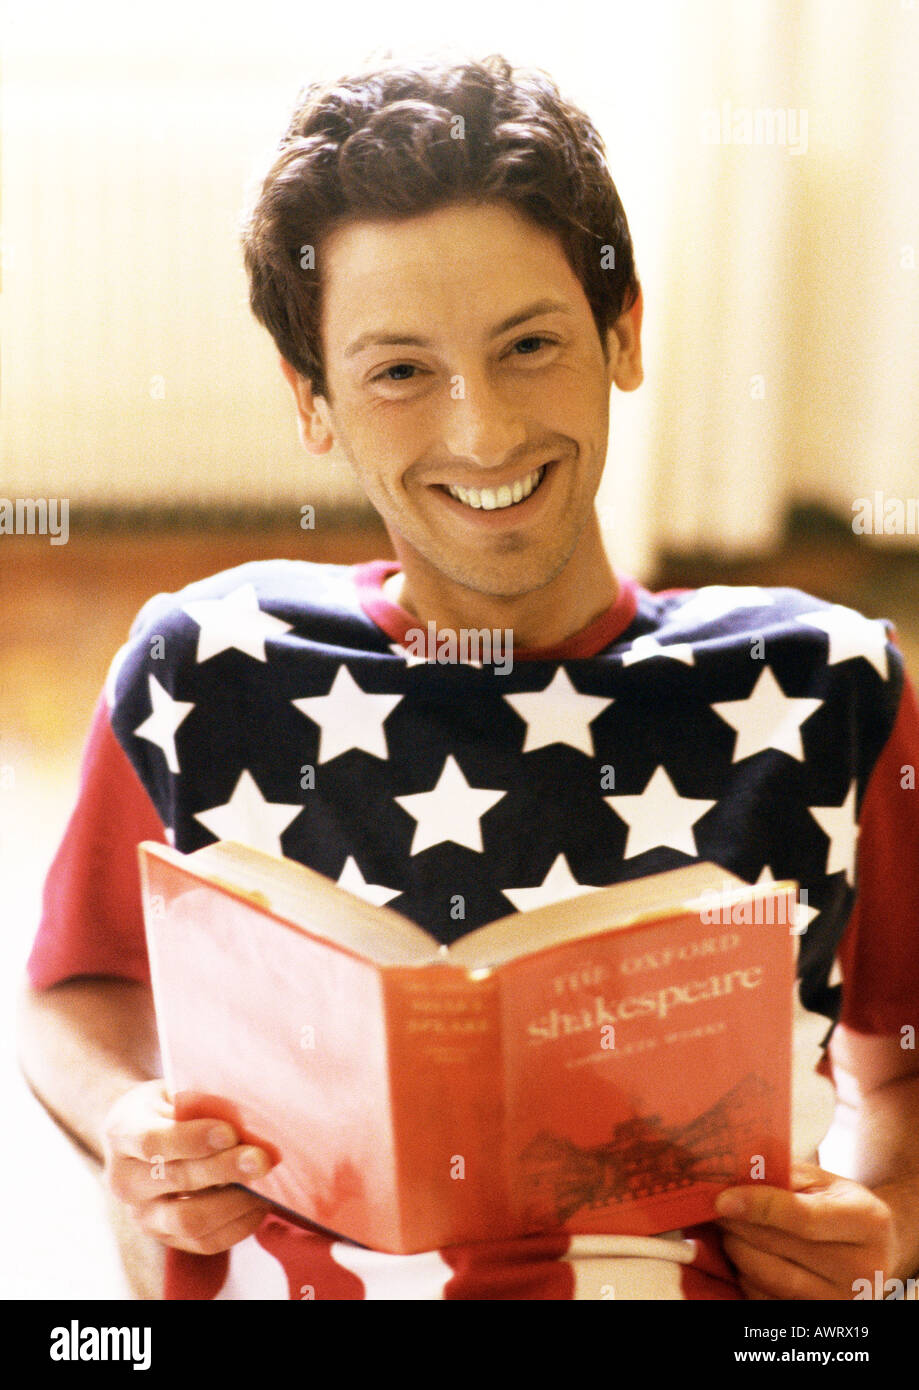 Man holding book, smiling, portrait Stock Photo